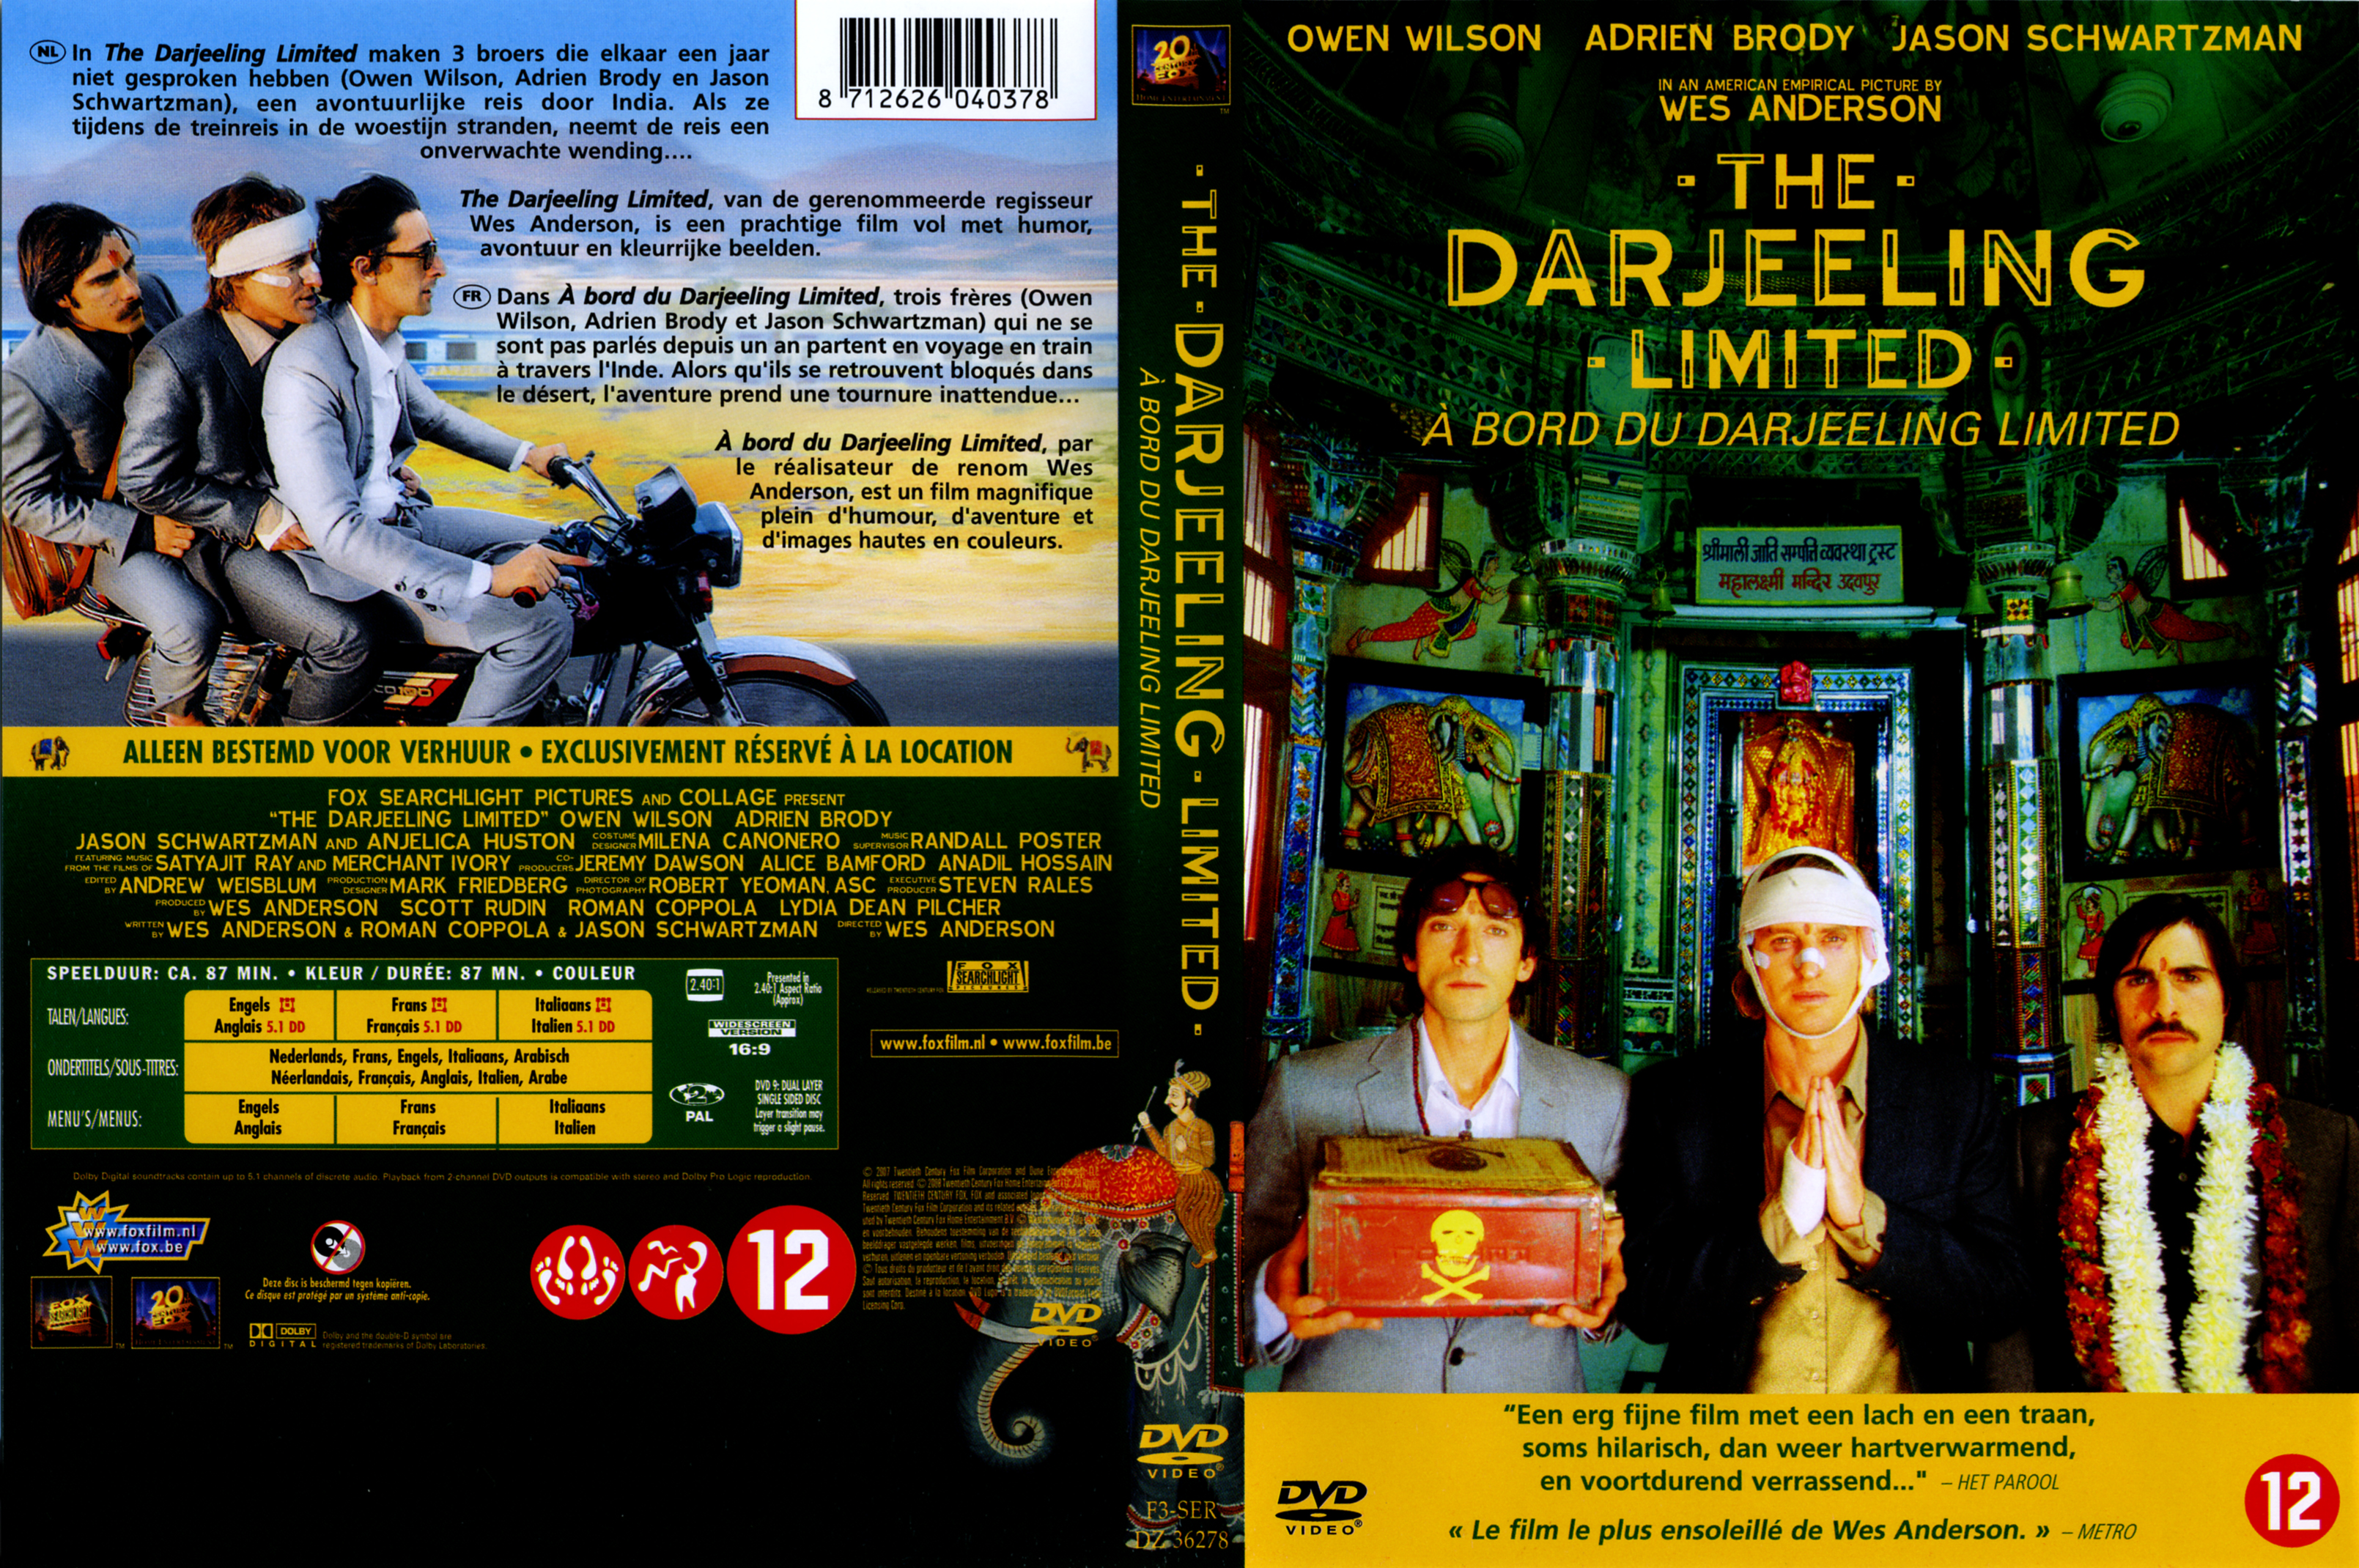 Jaquette DVD A bord du Darjeeling limited